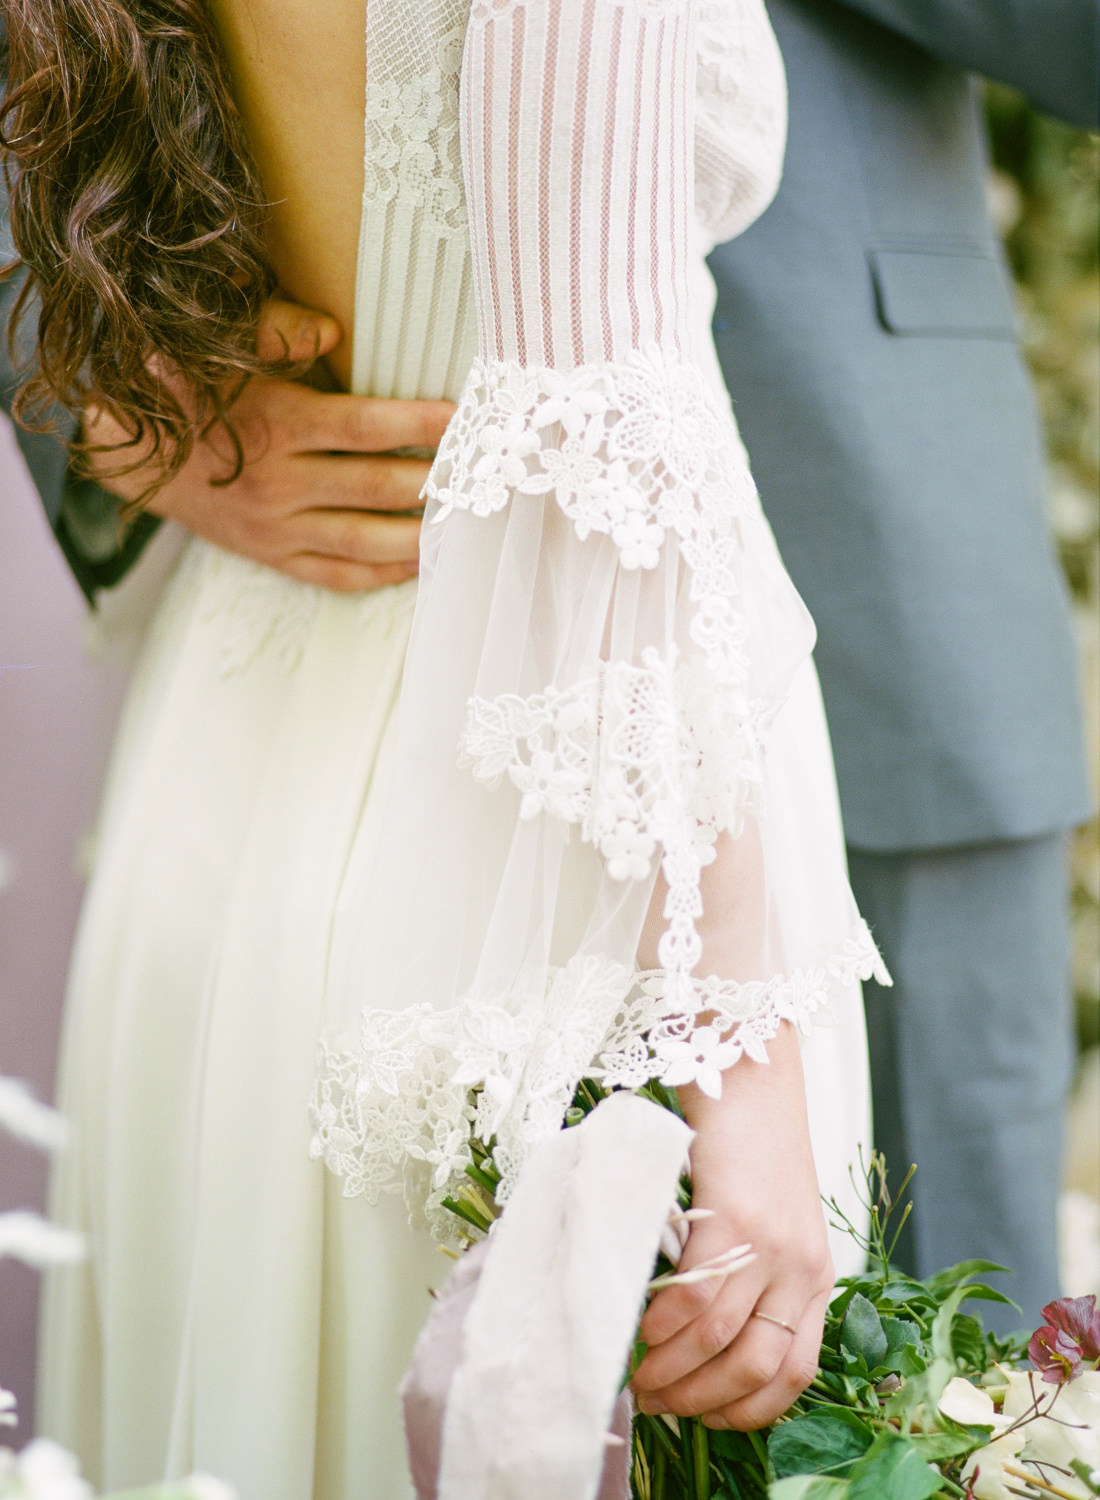 Claire Pettibone lace sleeve wedding dress, St Louis Fine Art Film Wedding Photographer Erica Robnett Photography